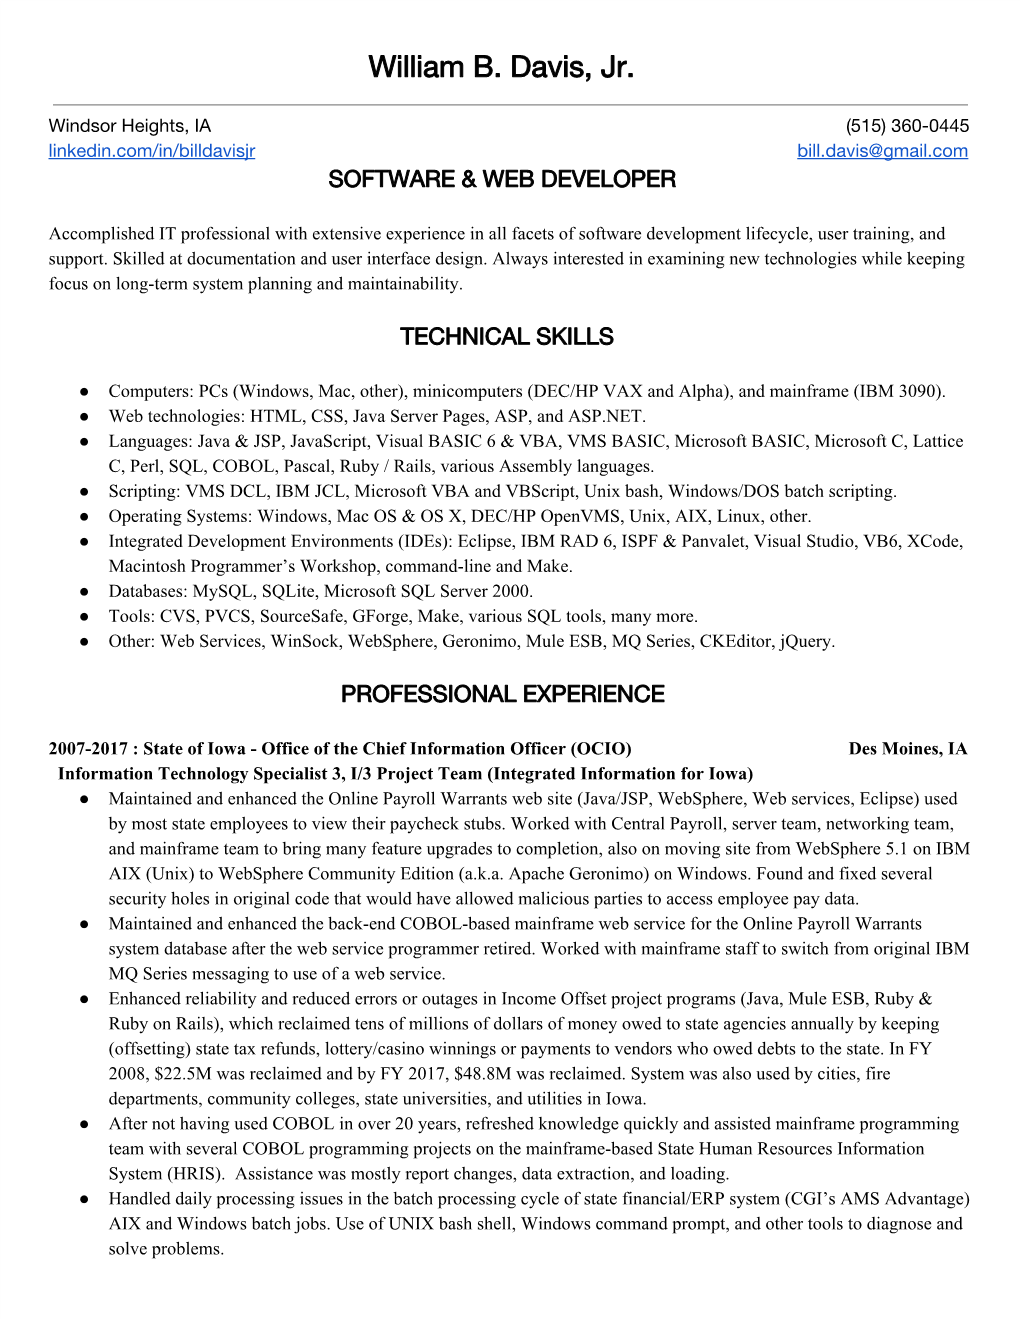 My Summary Resume (PDF)